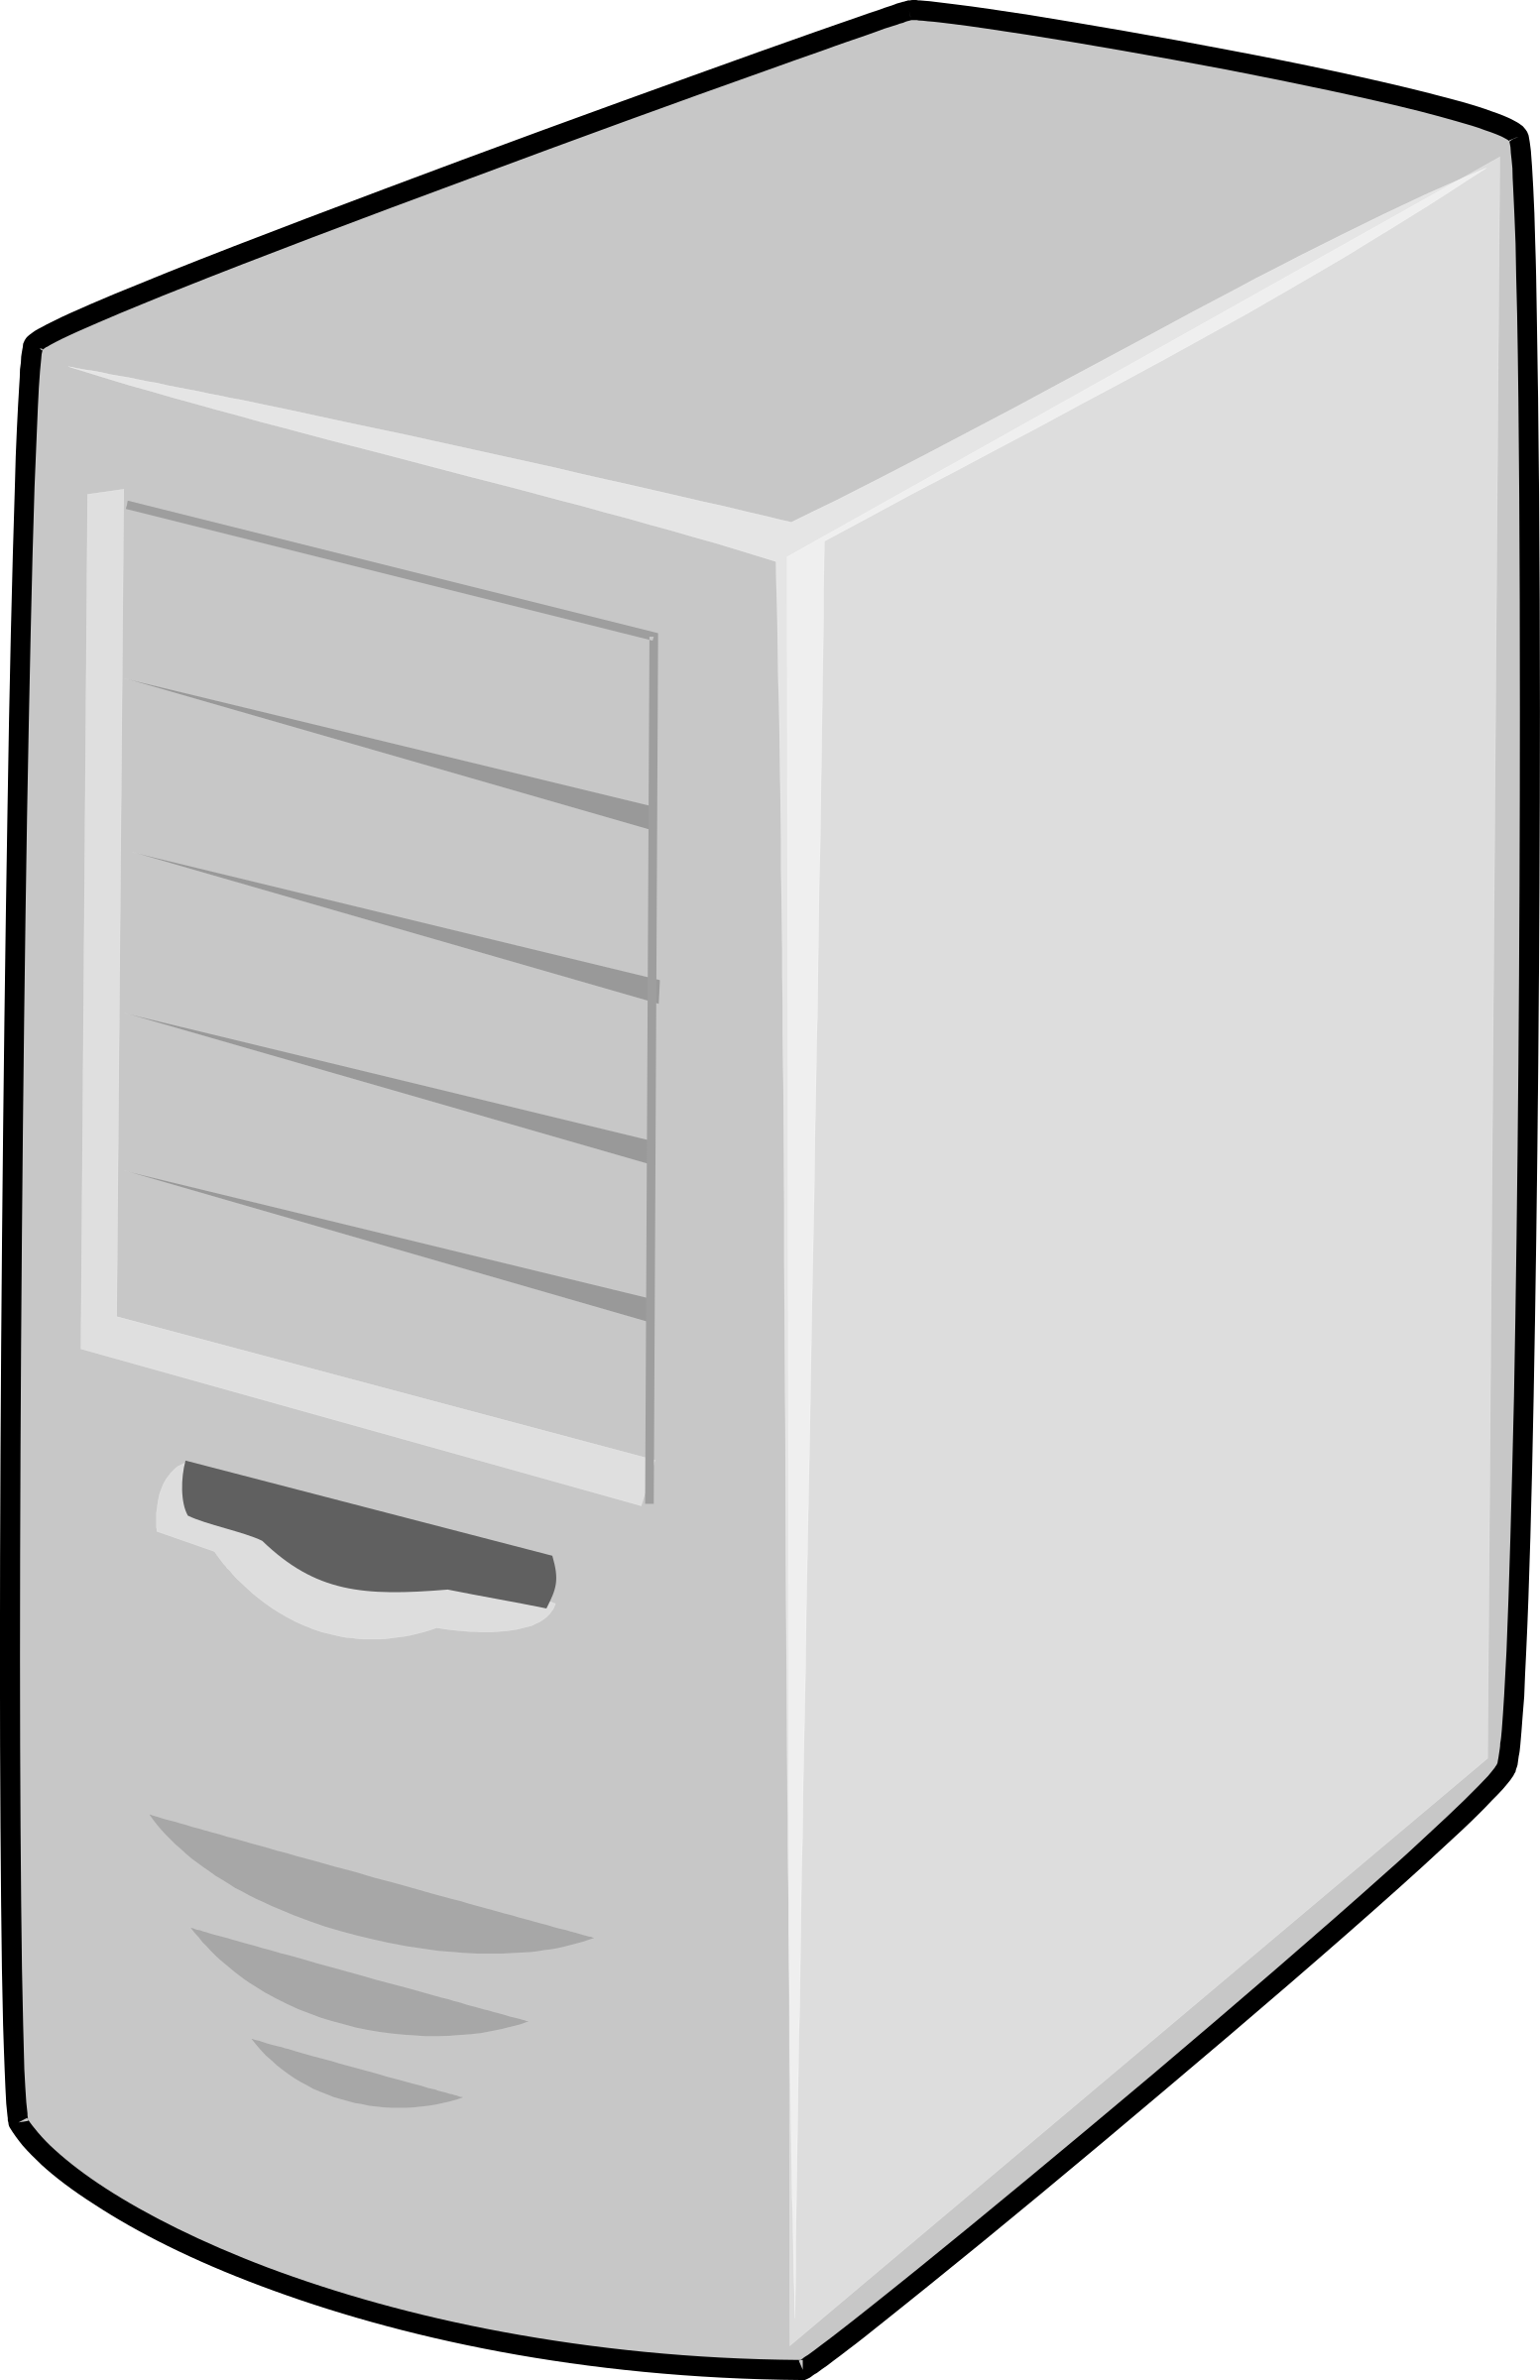 Server - Server Png (1553x2400)